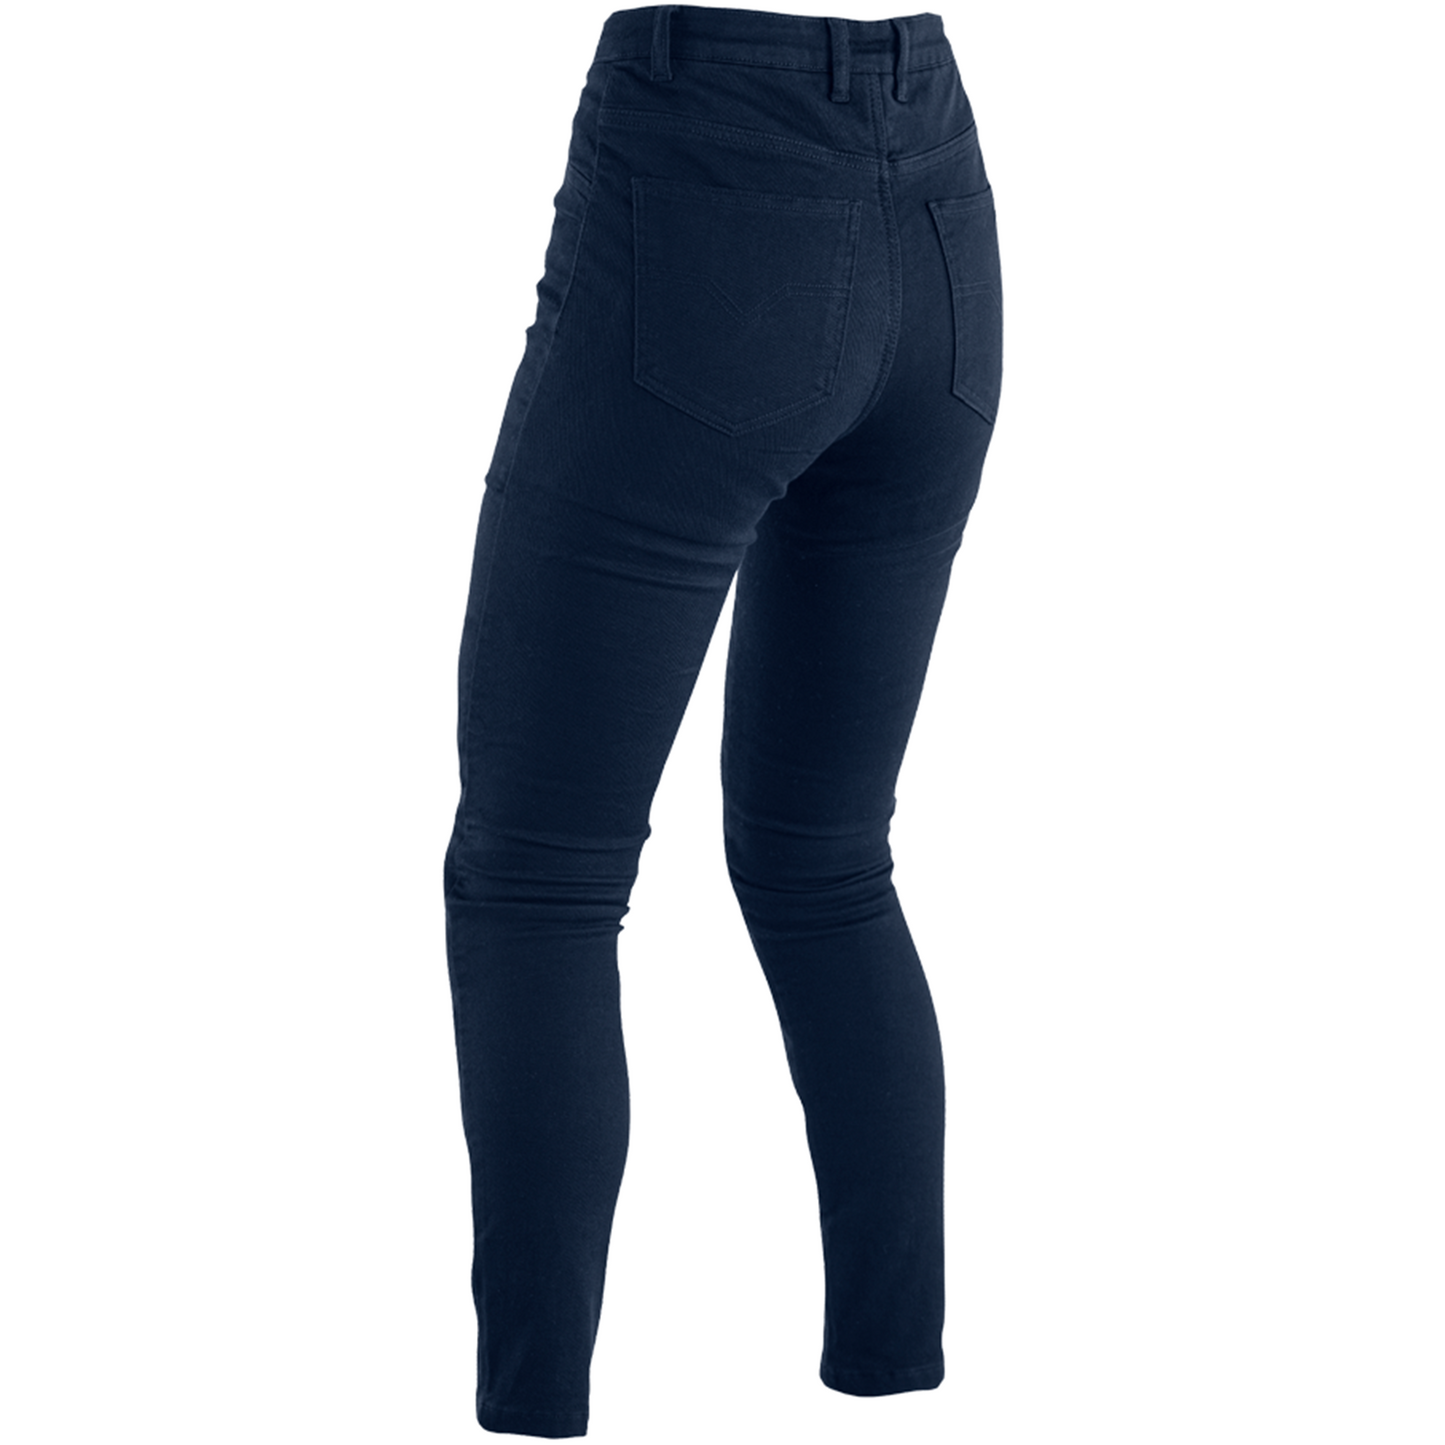 RST Reinforced Jegging CE Ladies Textile Jeans - Indigo Blue Denim - Short Leg